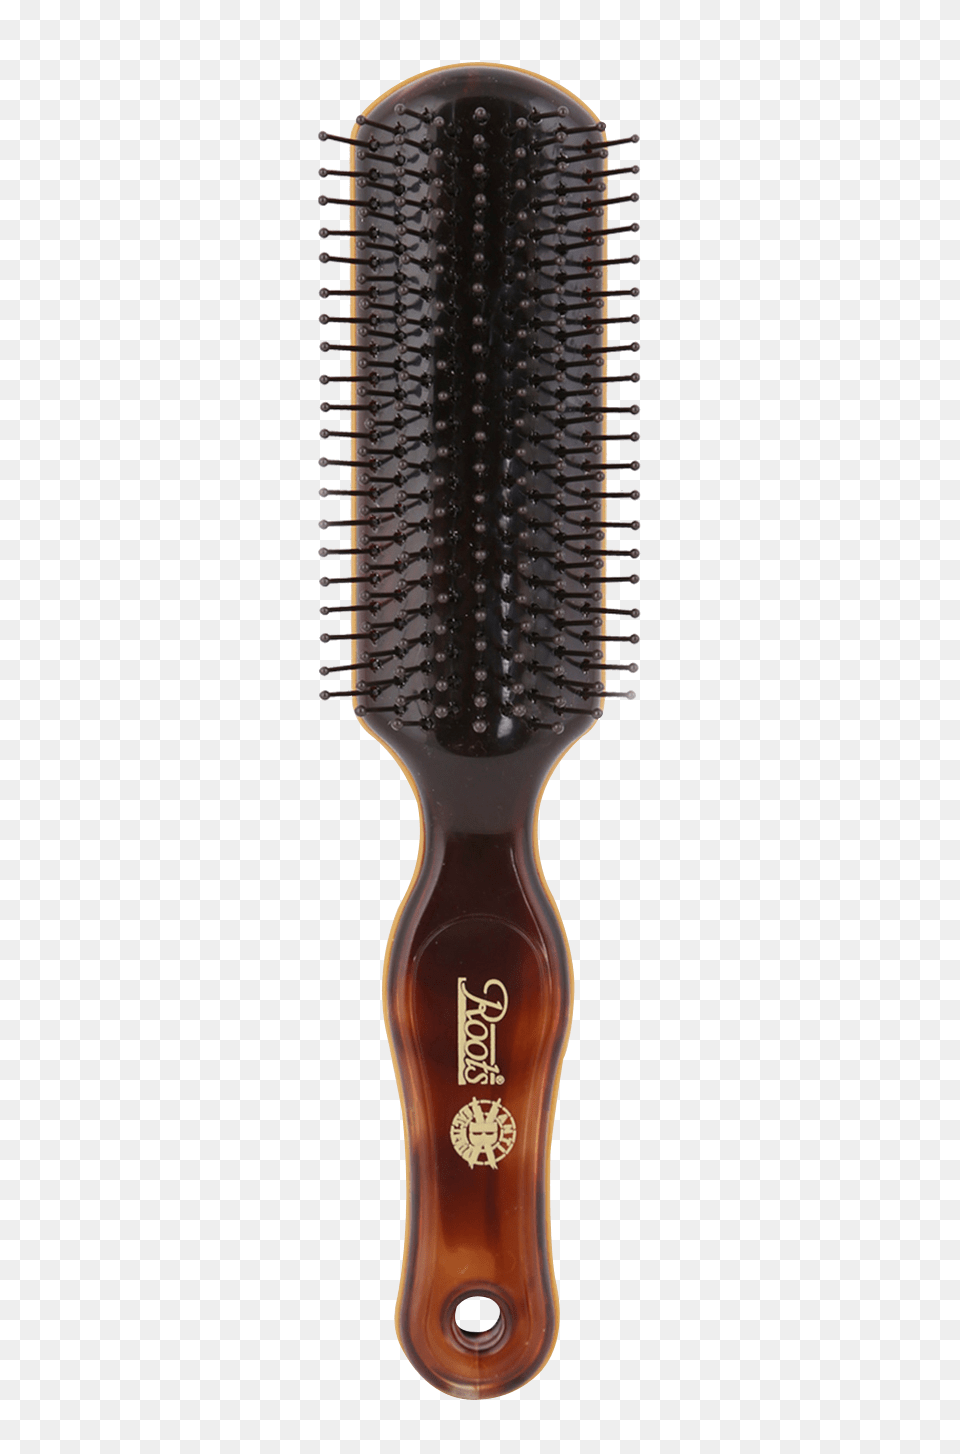 Pngpix Com Hair Brush Transparent Image, Device, Tool, Smoke Pipe Free Png Download